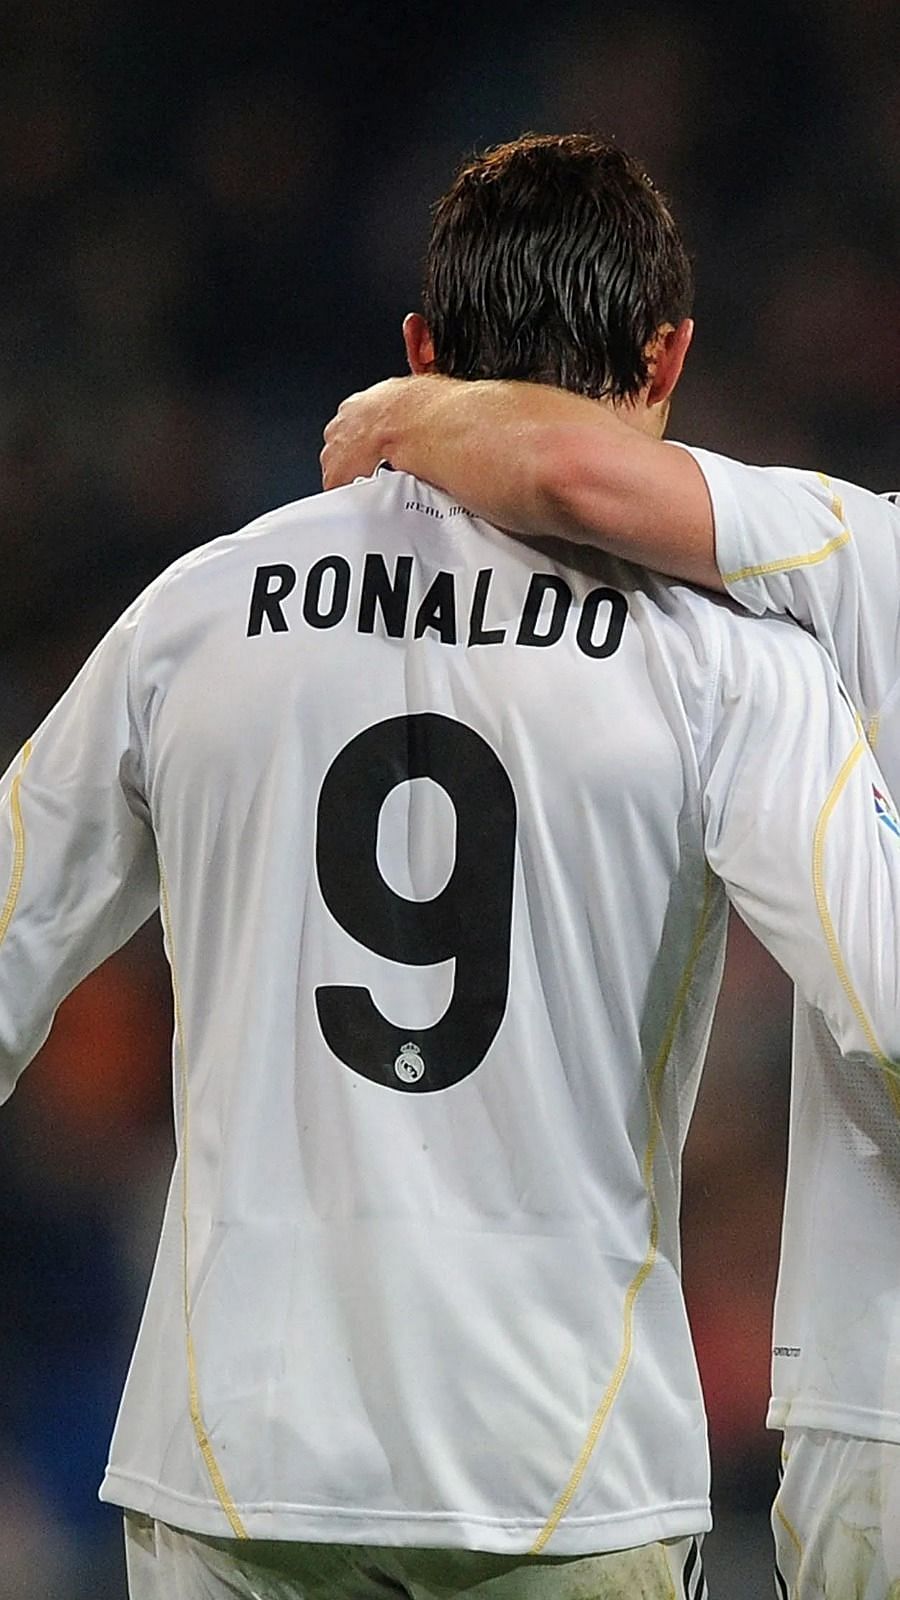 ronaldo shirt number in united